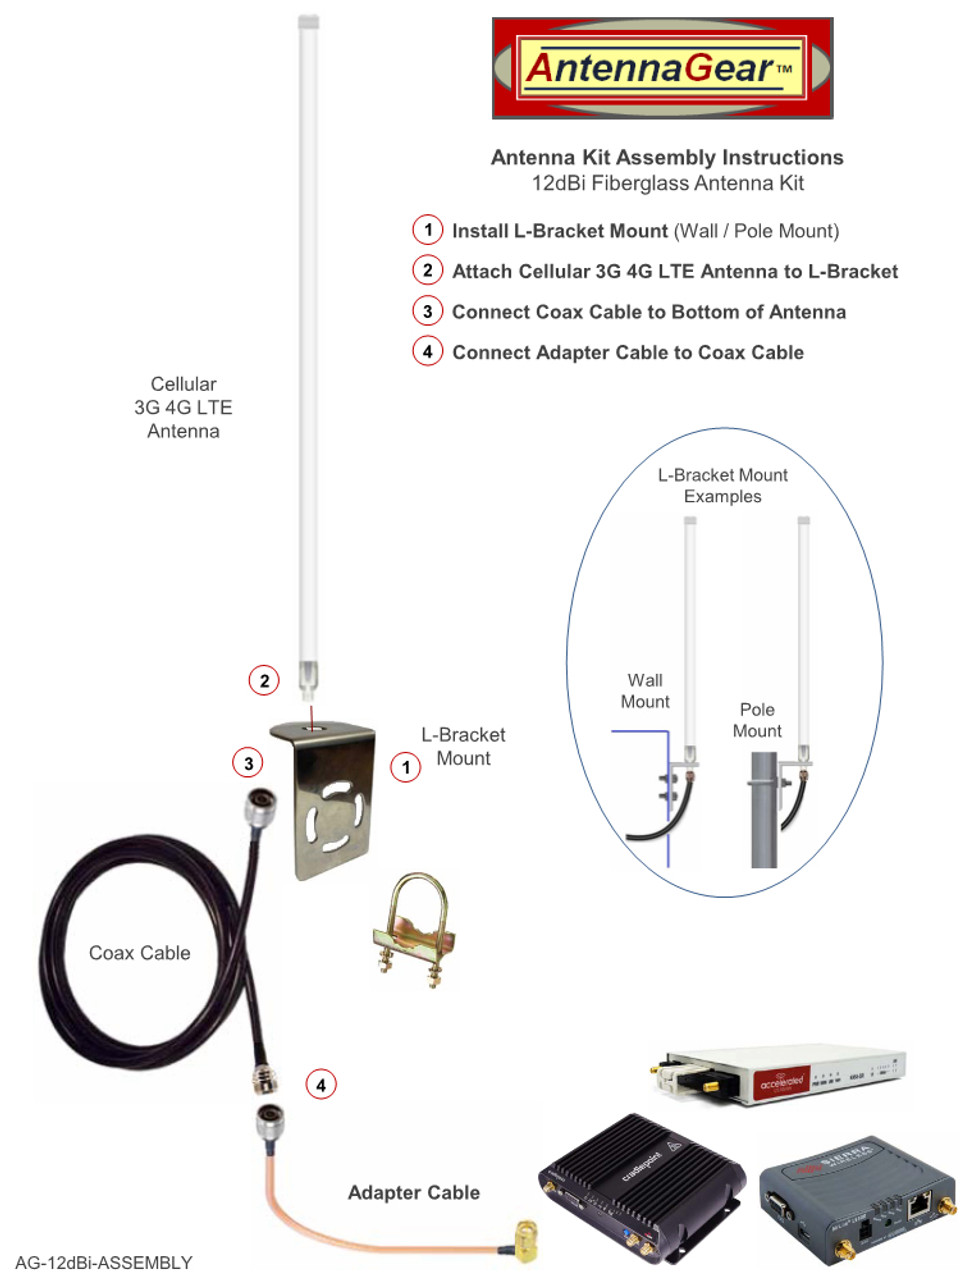 12dBi Sierra Wireless RV50 Router Omni Directional Fiberglass 4G LTE XLTE Antenna Kit w/ Cable Length Options